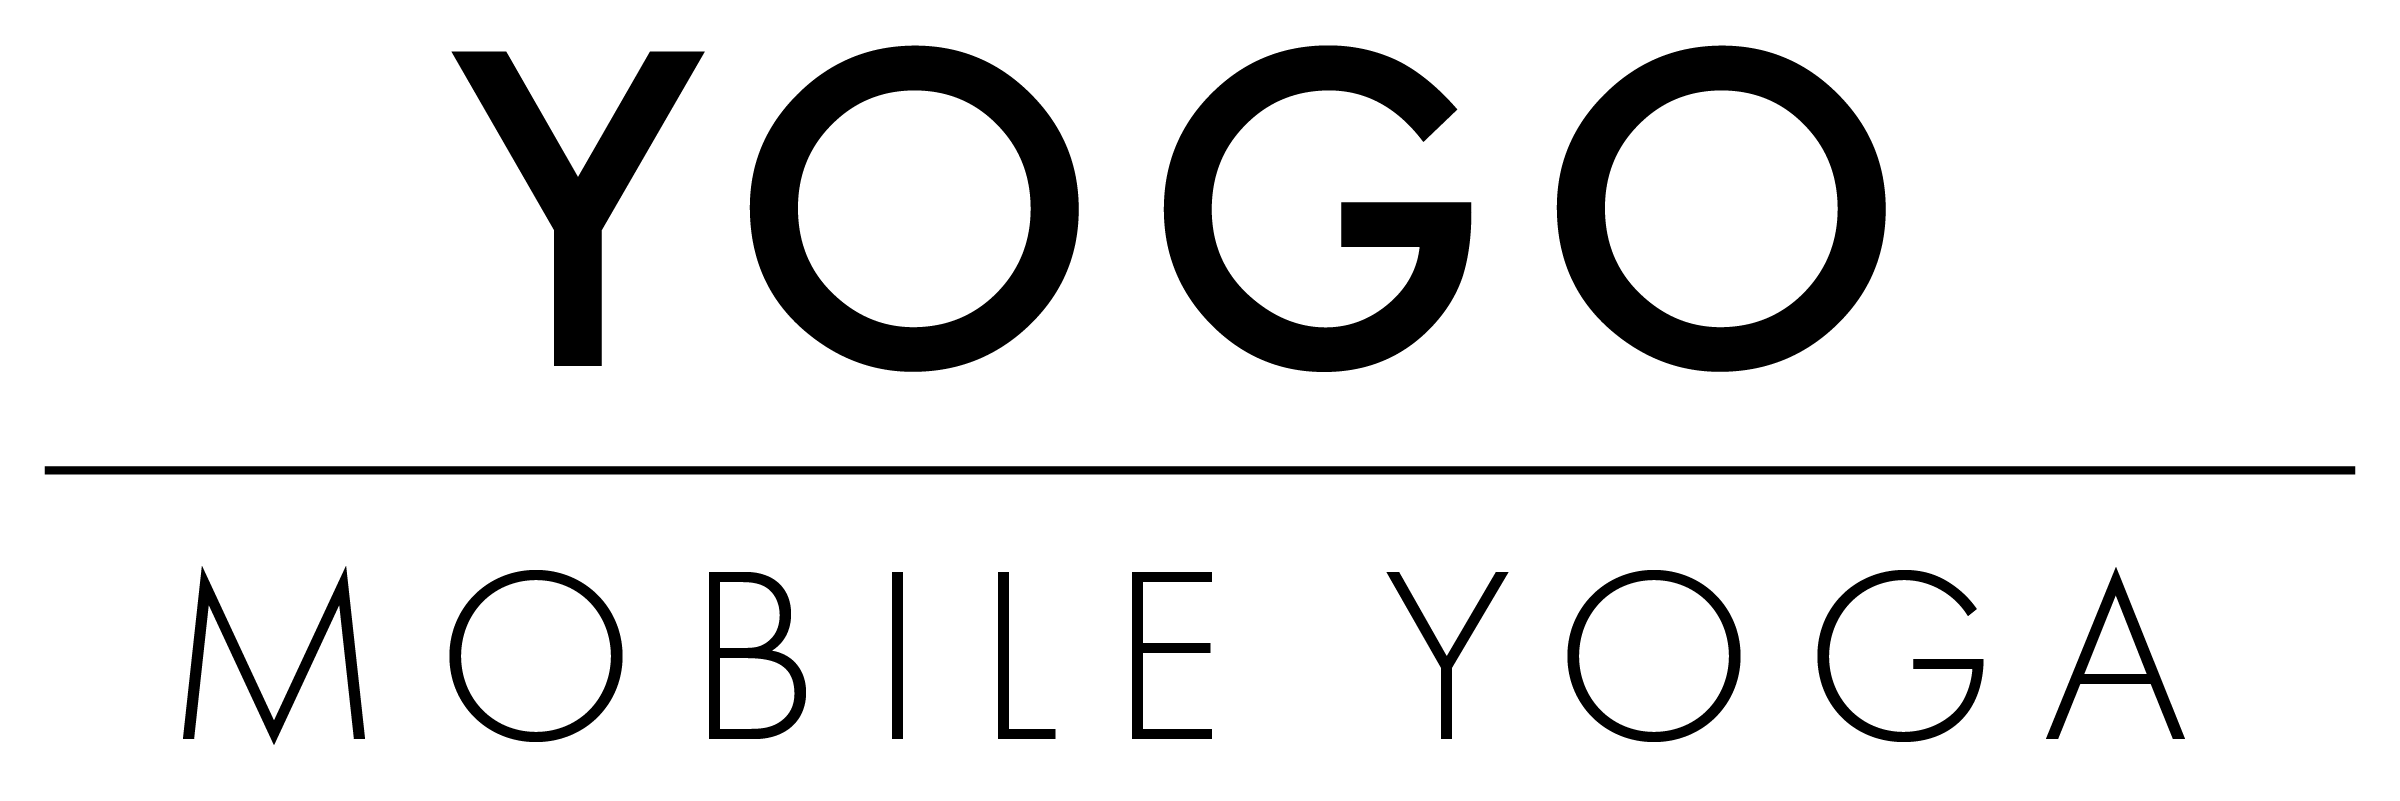 Yogo Mobile Yoga Black on White.png